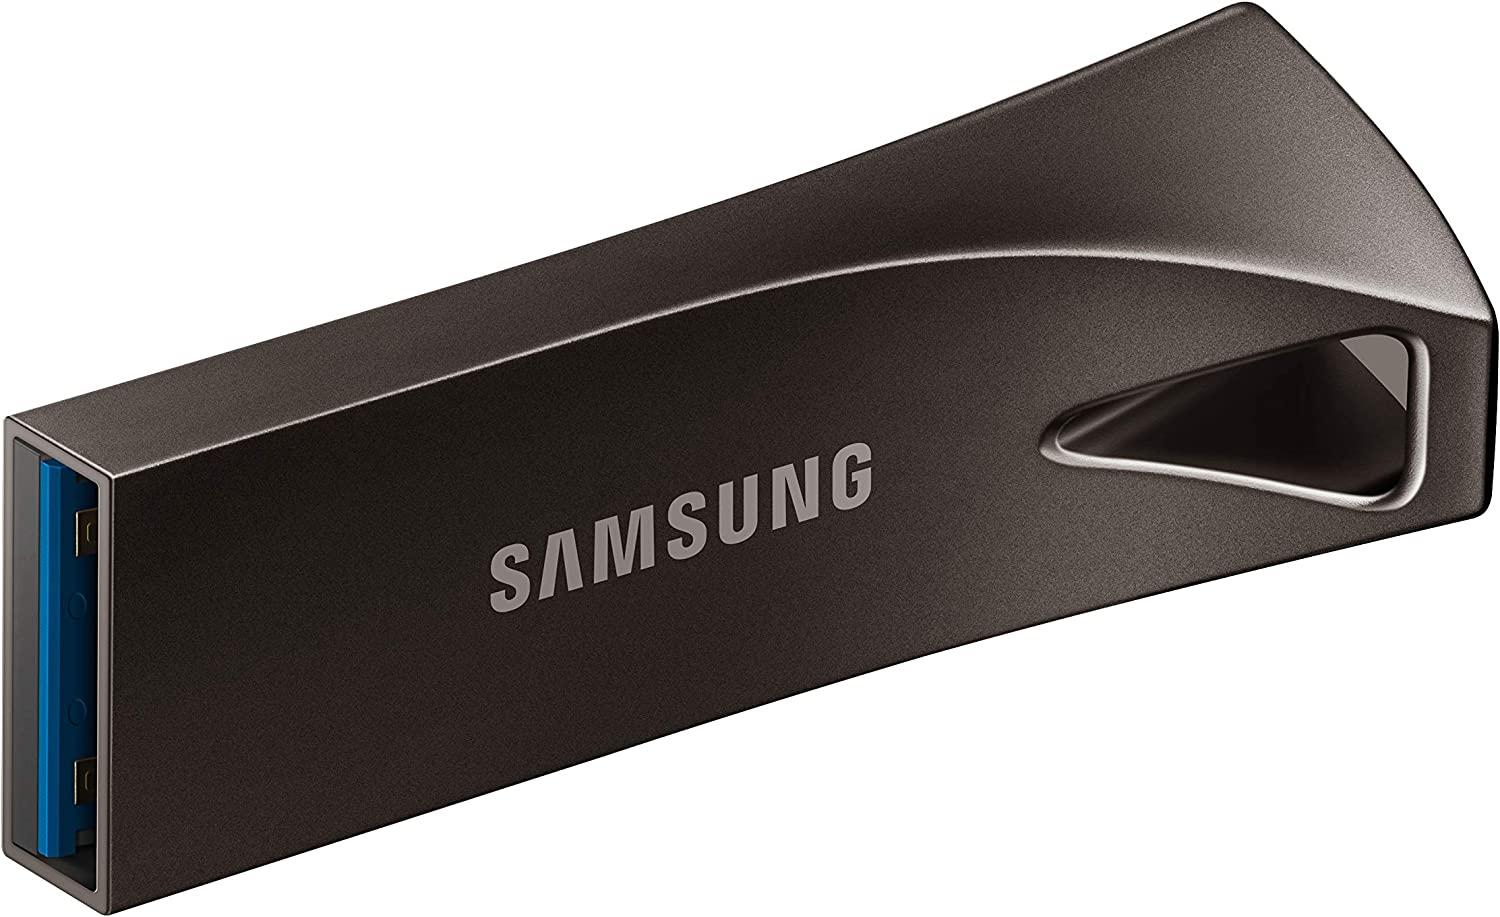 128GB Samsung Bar Plus 3.1 USB Flash Drive for $14.99